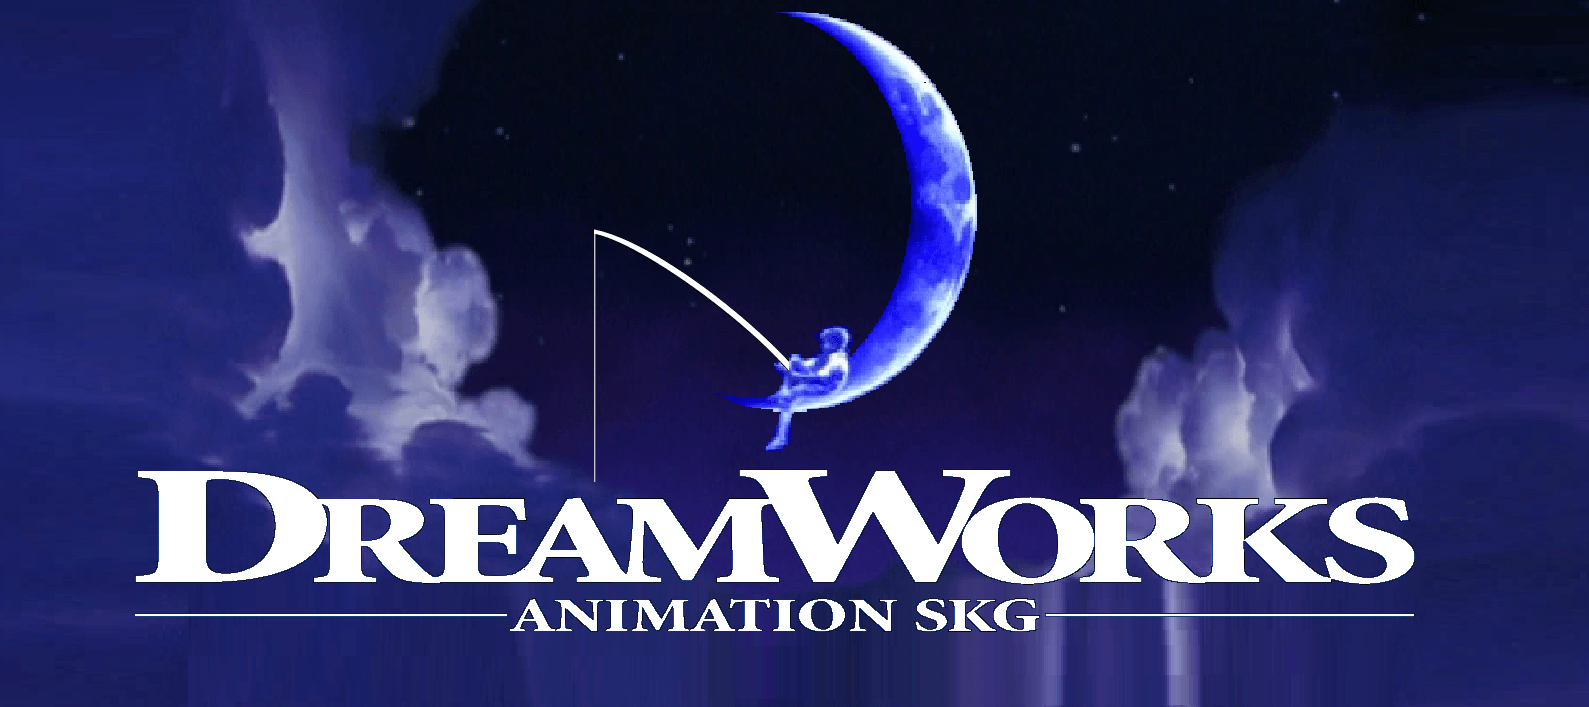 Воркс пикчерс. Студия Дримворкс. Dreamworks animation логотип. Дримворкс заставка. Логотипы мультфильмов Дримворкс.